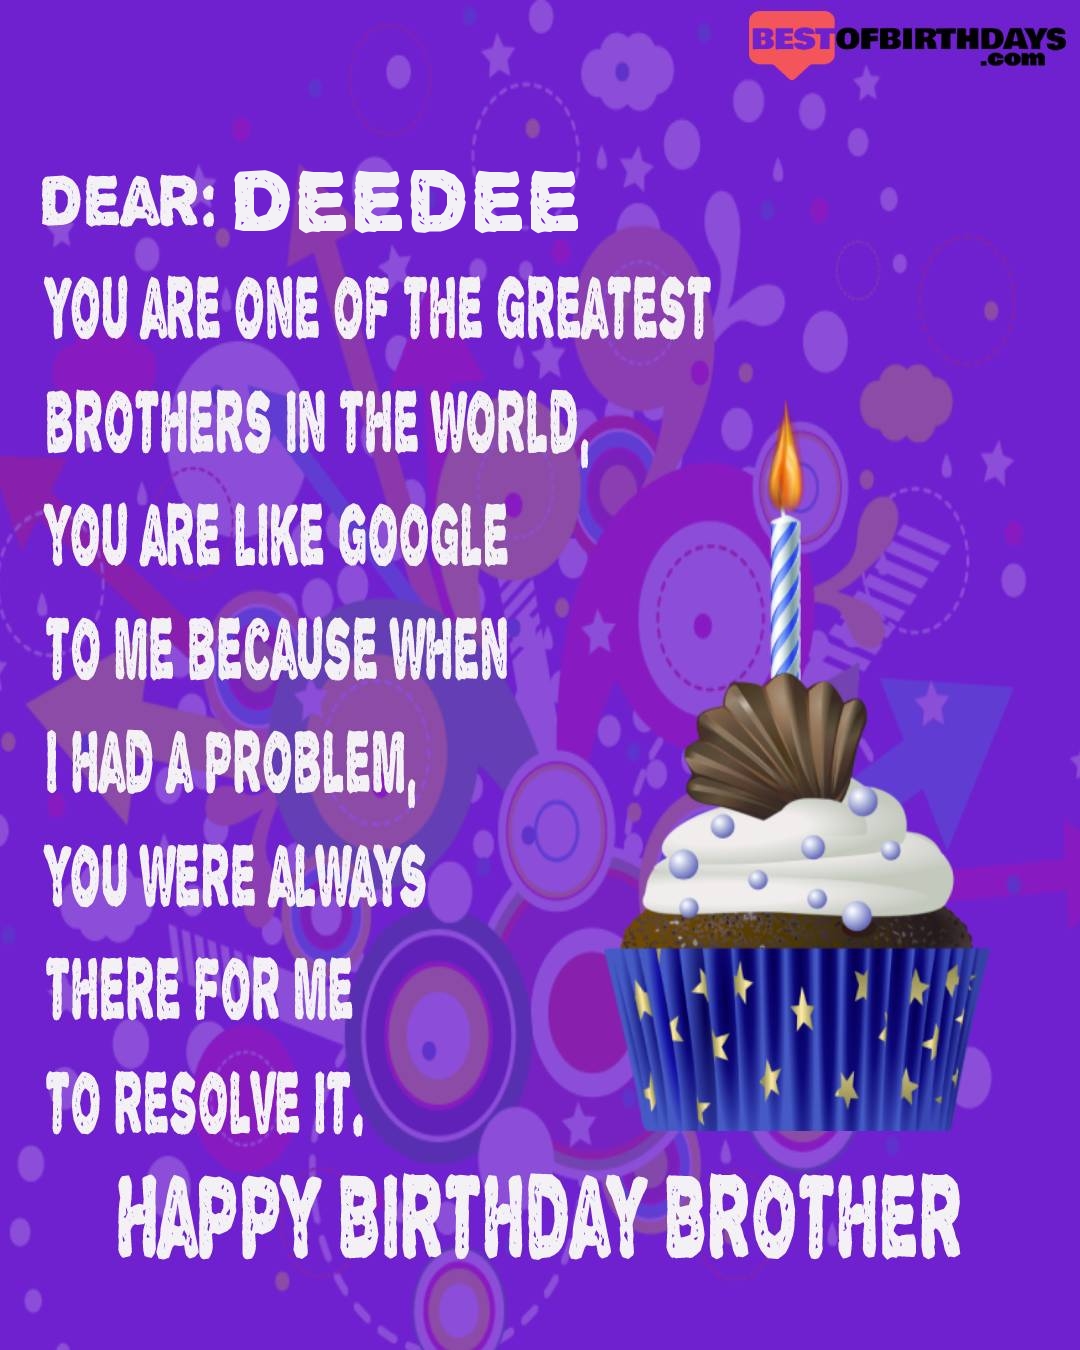 Happy birthday deedee bhai brother bro